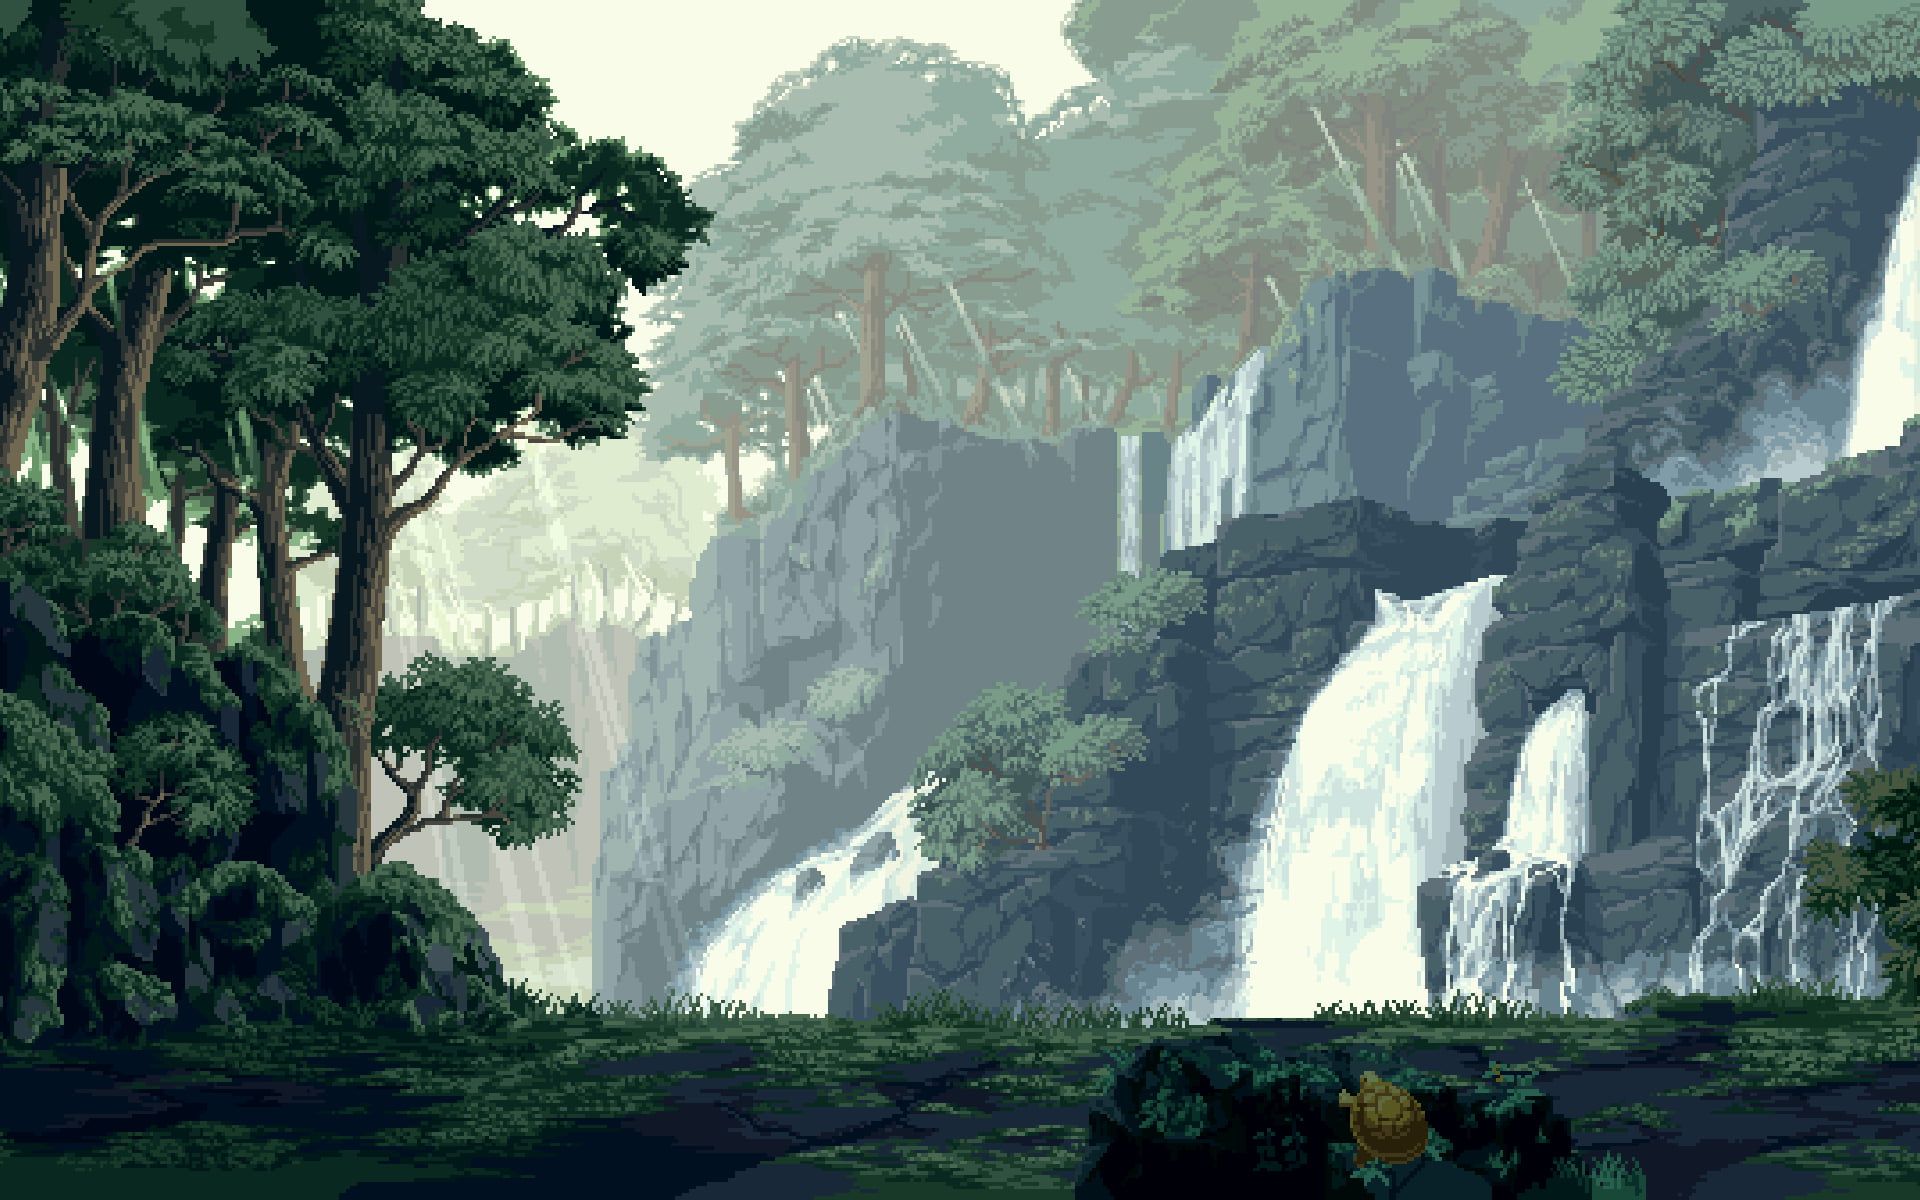 waterfalls game graphic wallpaper pixel art #forest #waterfall #artwork digital art #turtle #trees #nature #pixel. Pixel art, Digital wallpaper, Graphic wallpaper